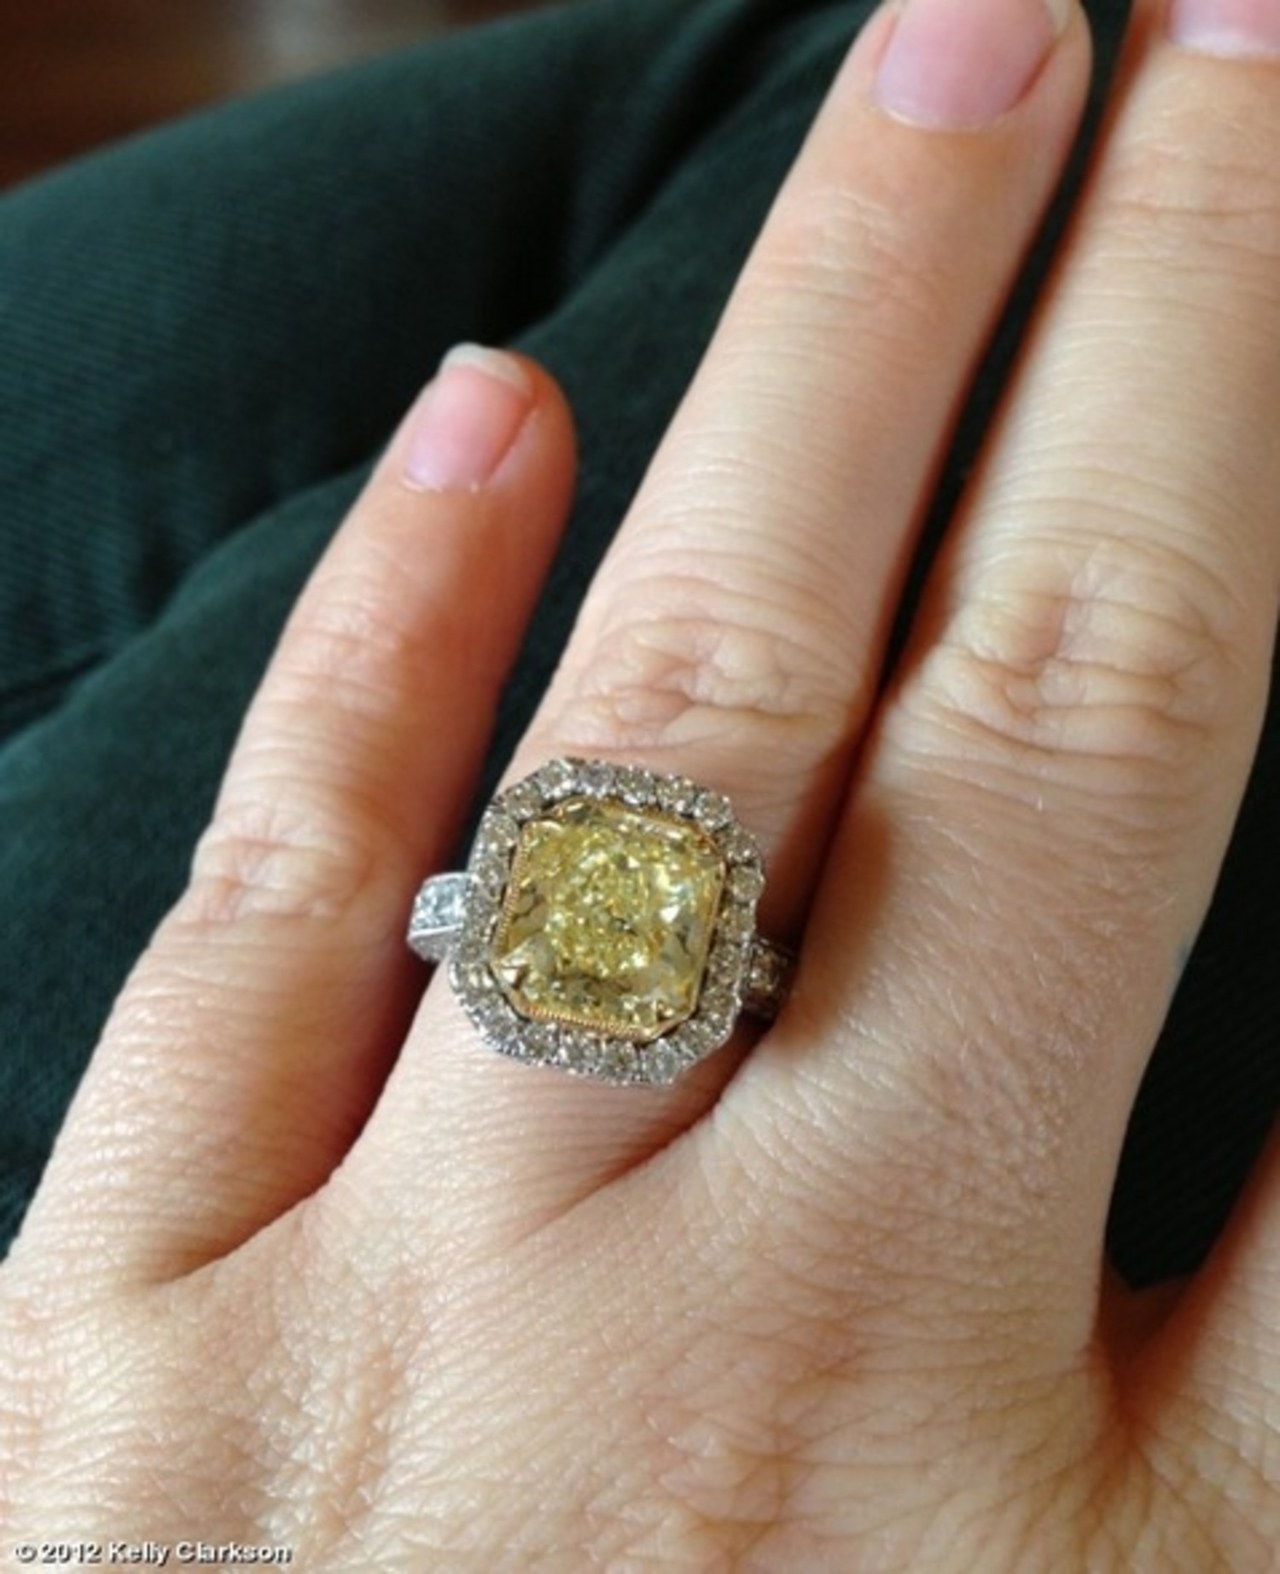 2 kelly clarkson brandon blackstock engaged engagement engagement rings rings celebrity weddings1216